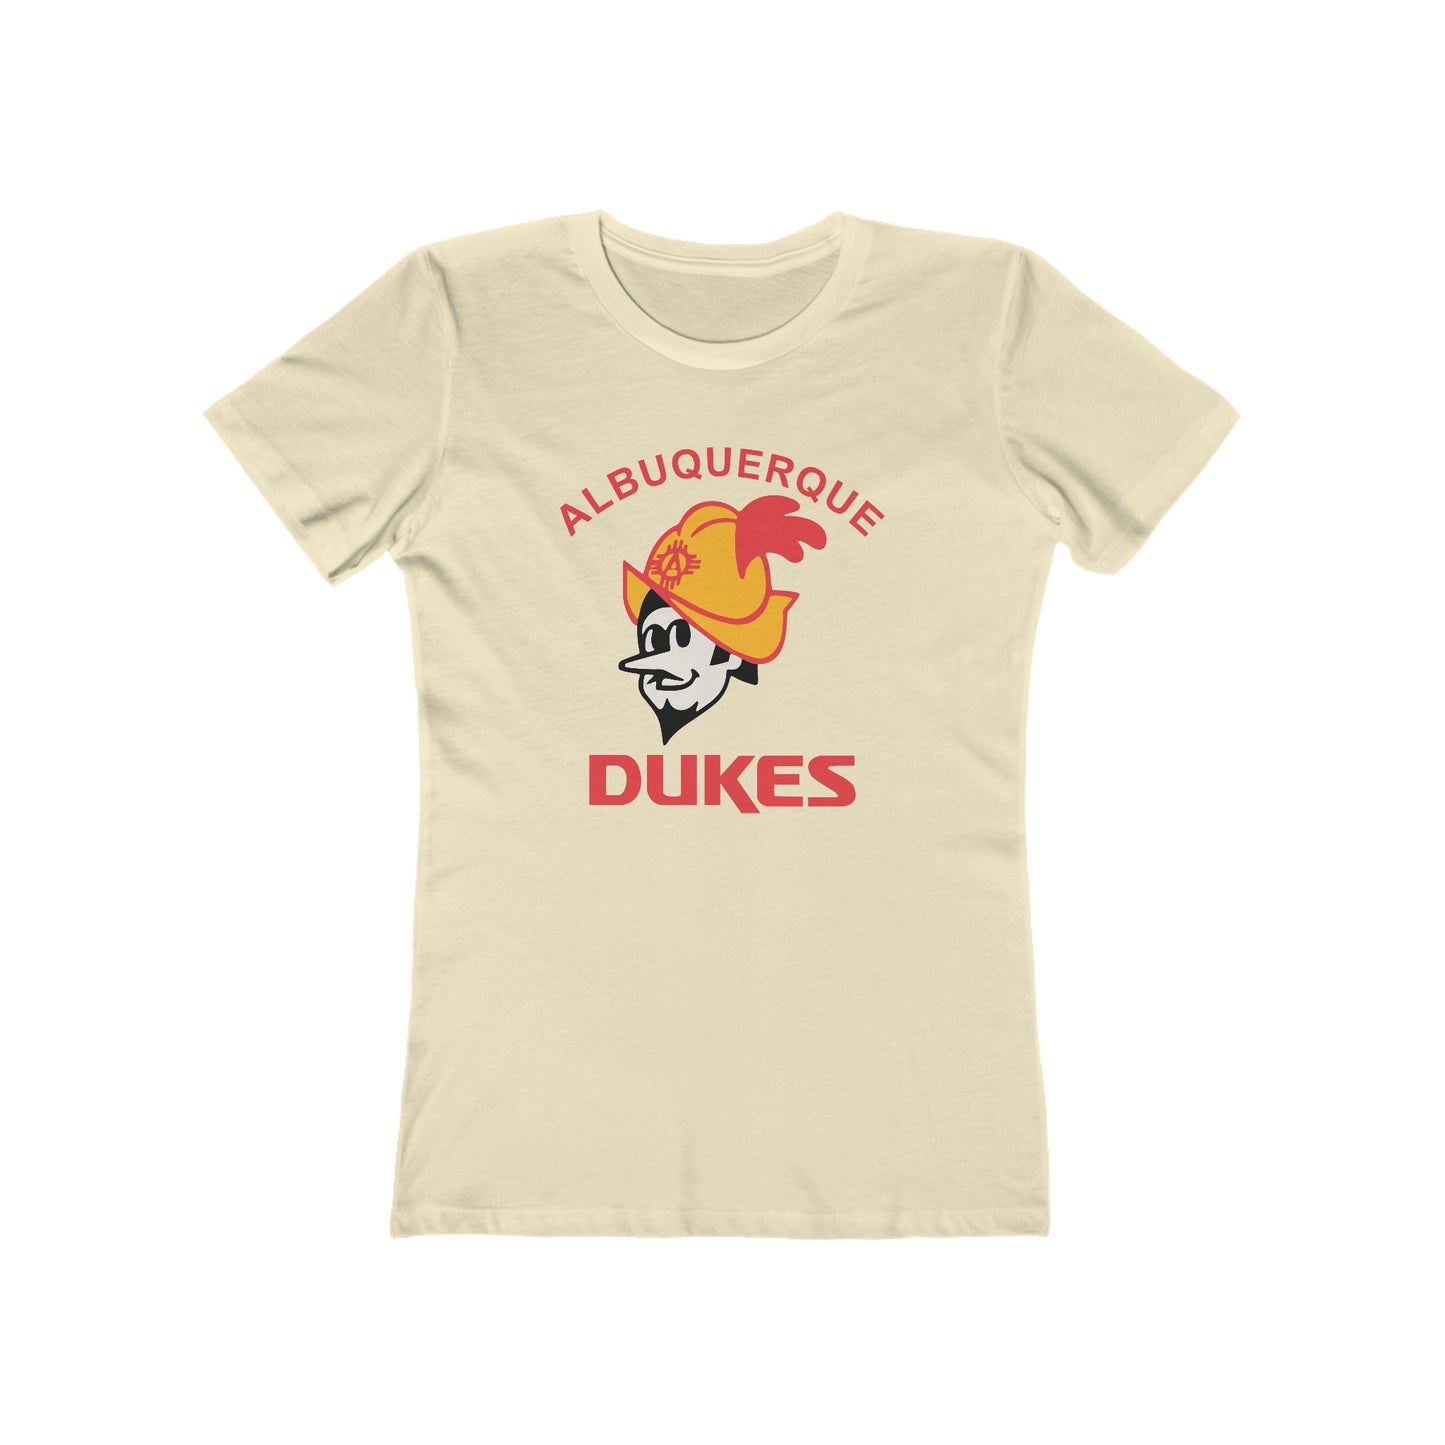 Albuquerque Dukes - Women's T-Shirt